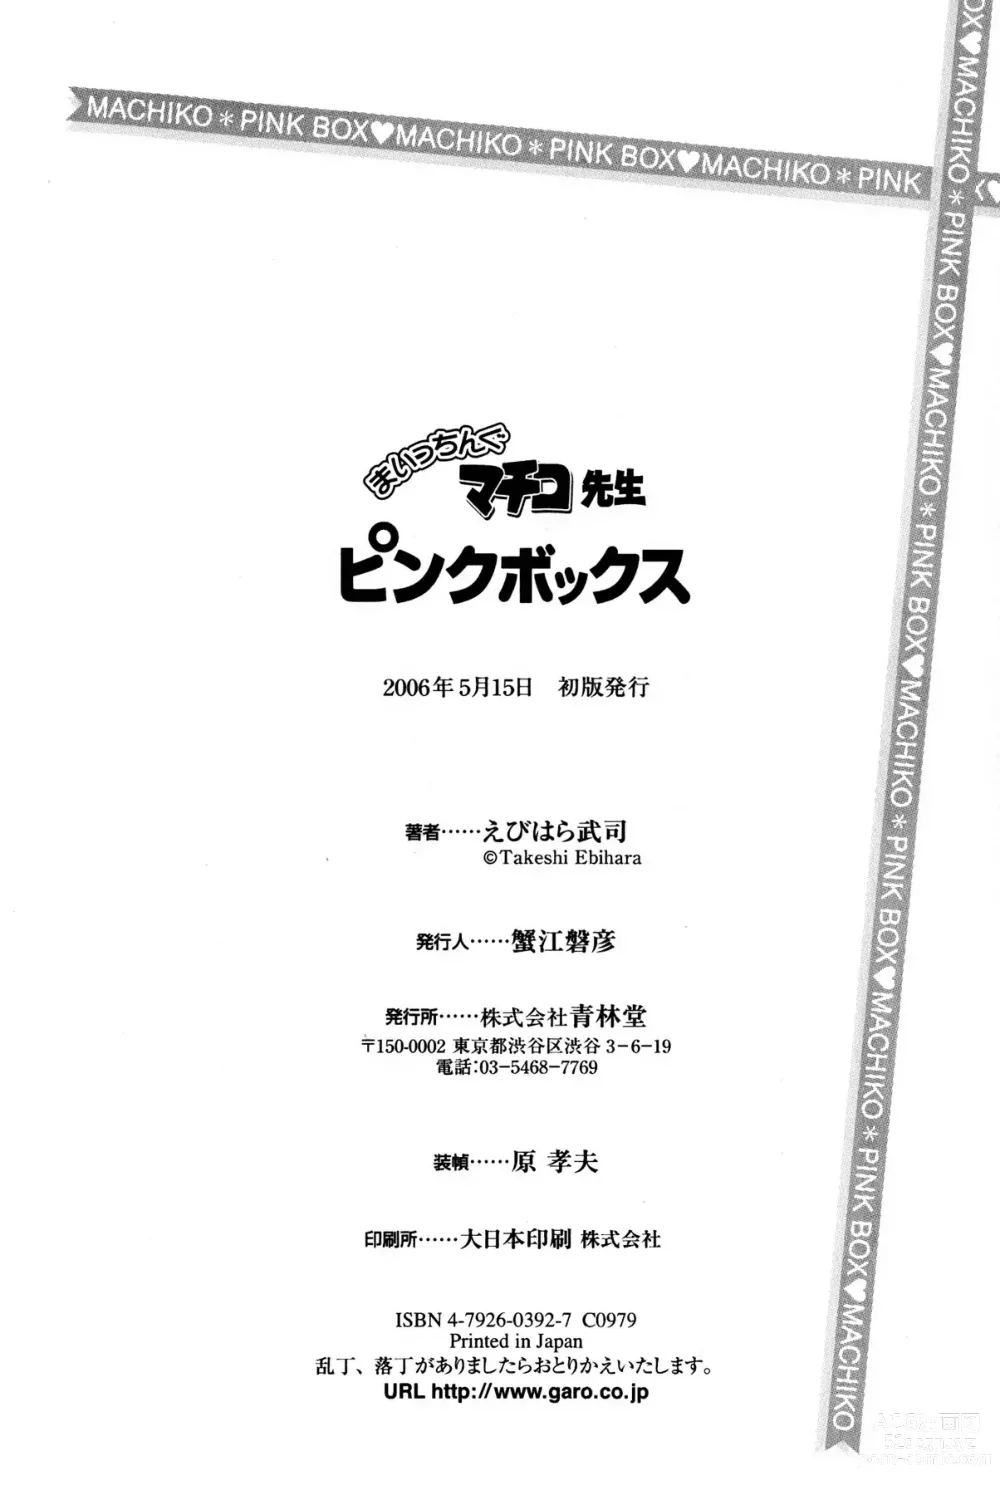 Page 228 of manga Maichiingu Machiko Sensei book pink